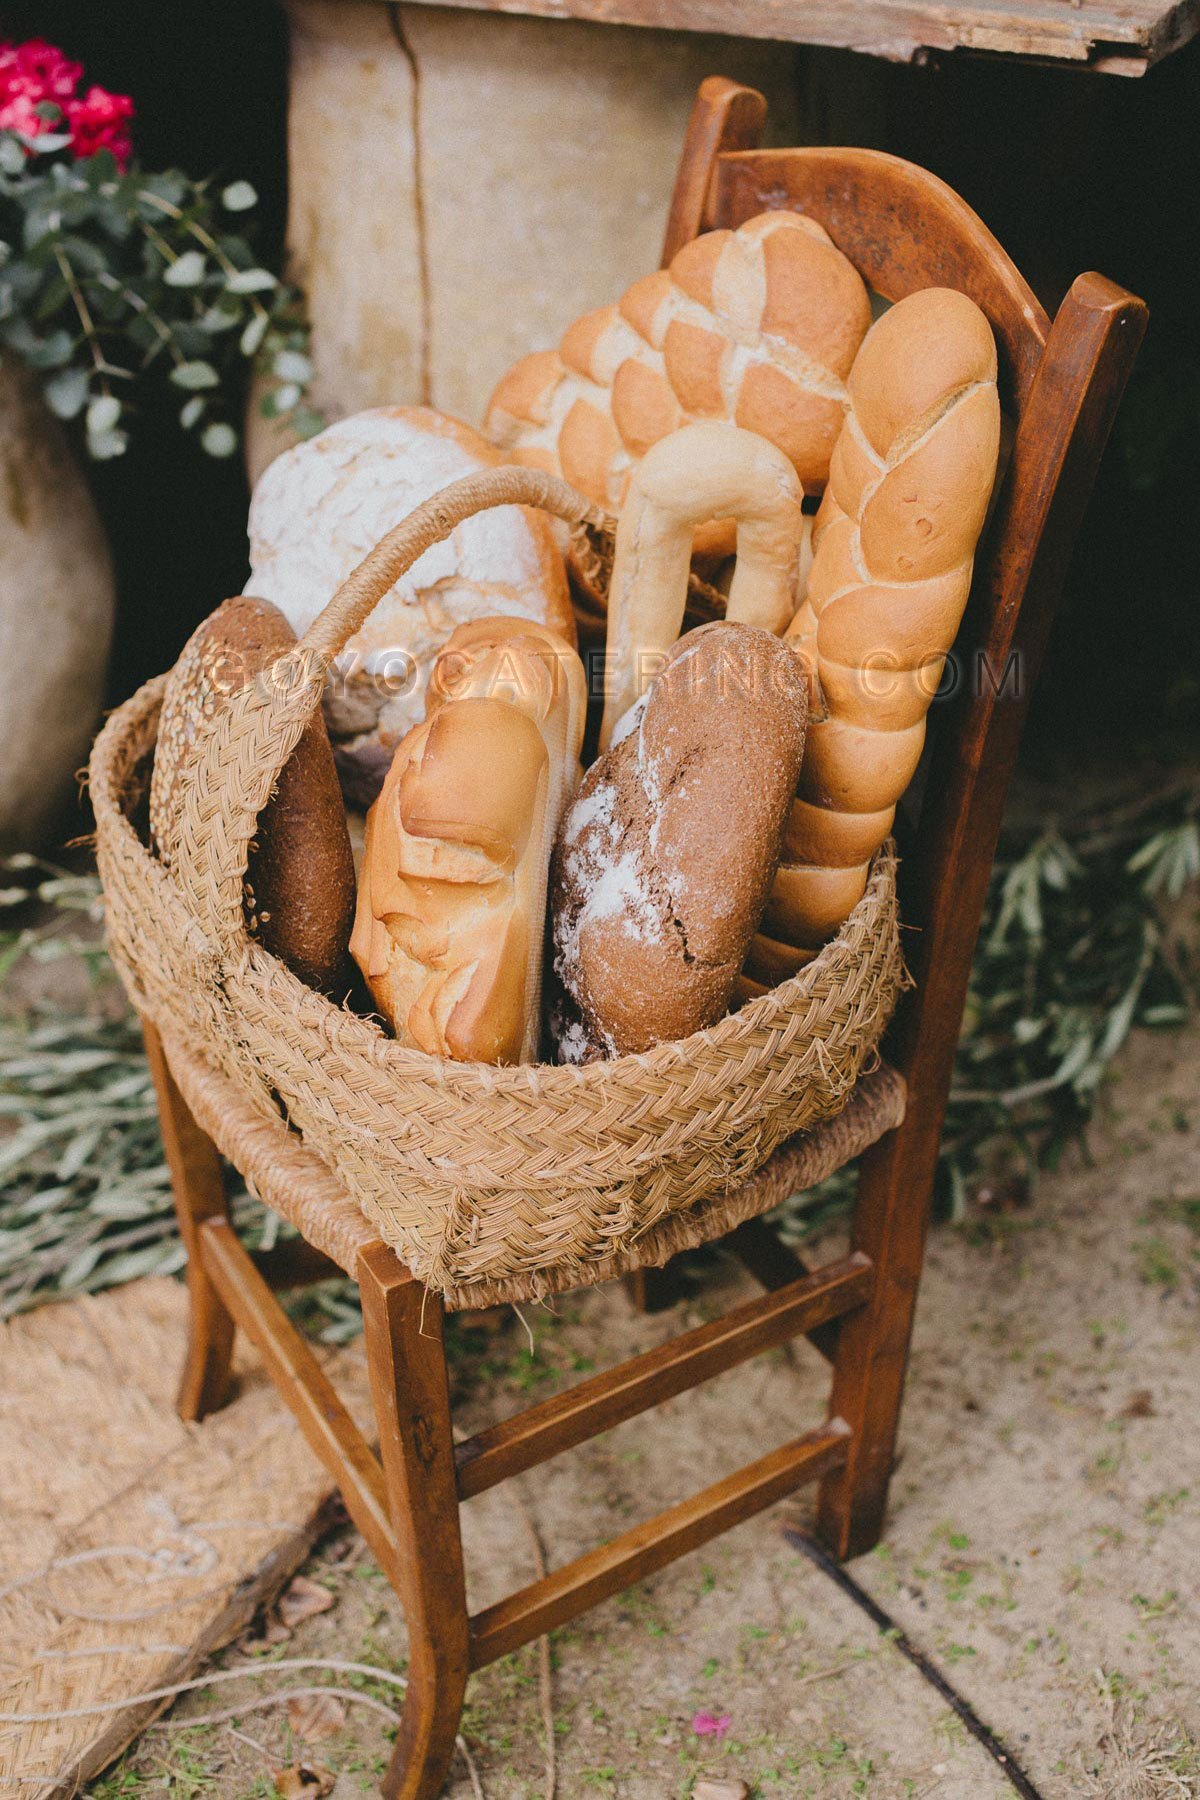 Artisan bread. | Goyo Catering